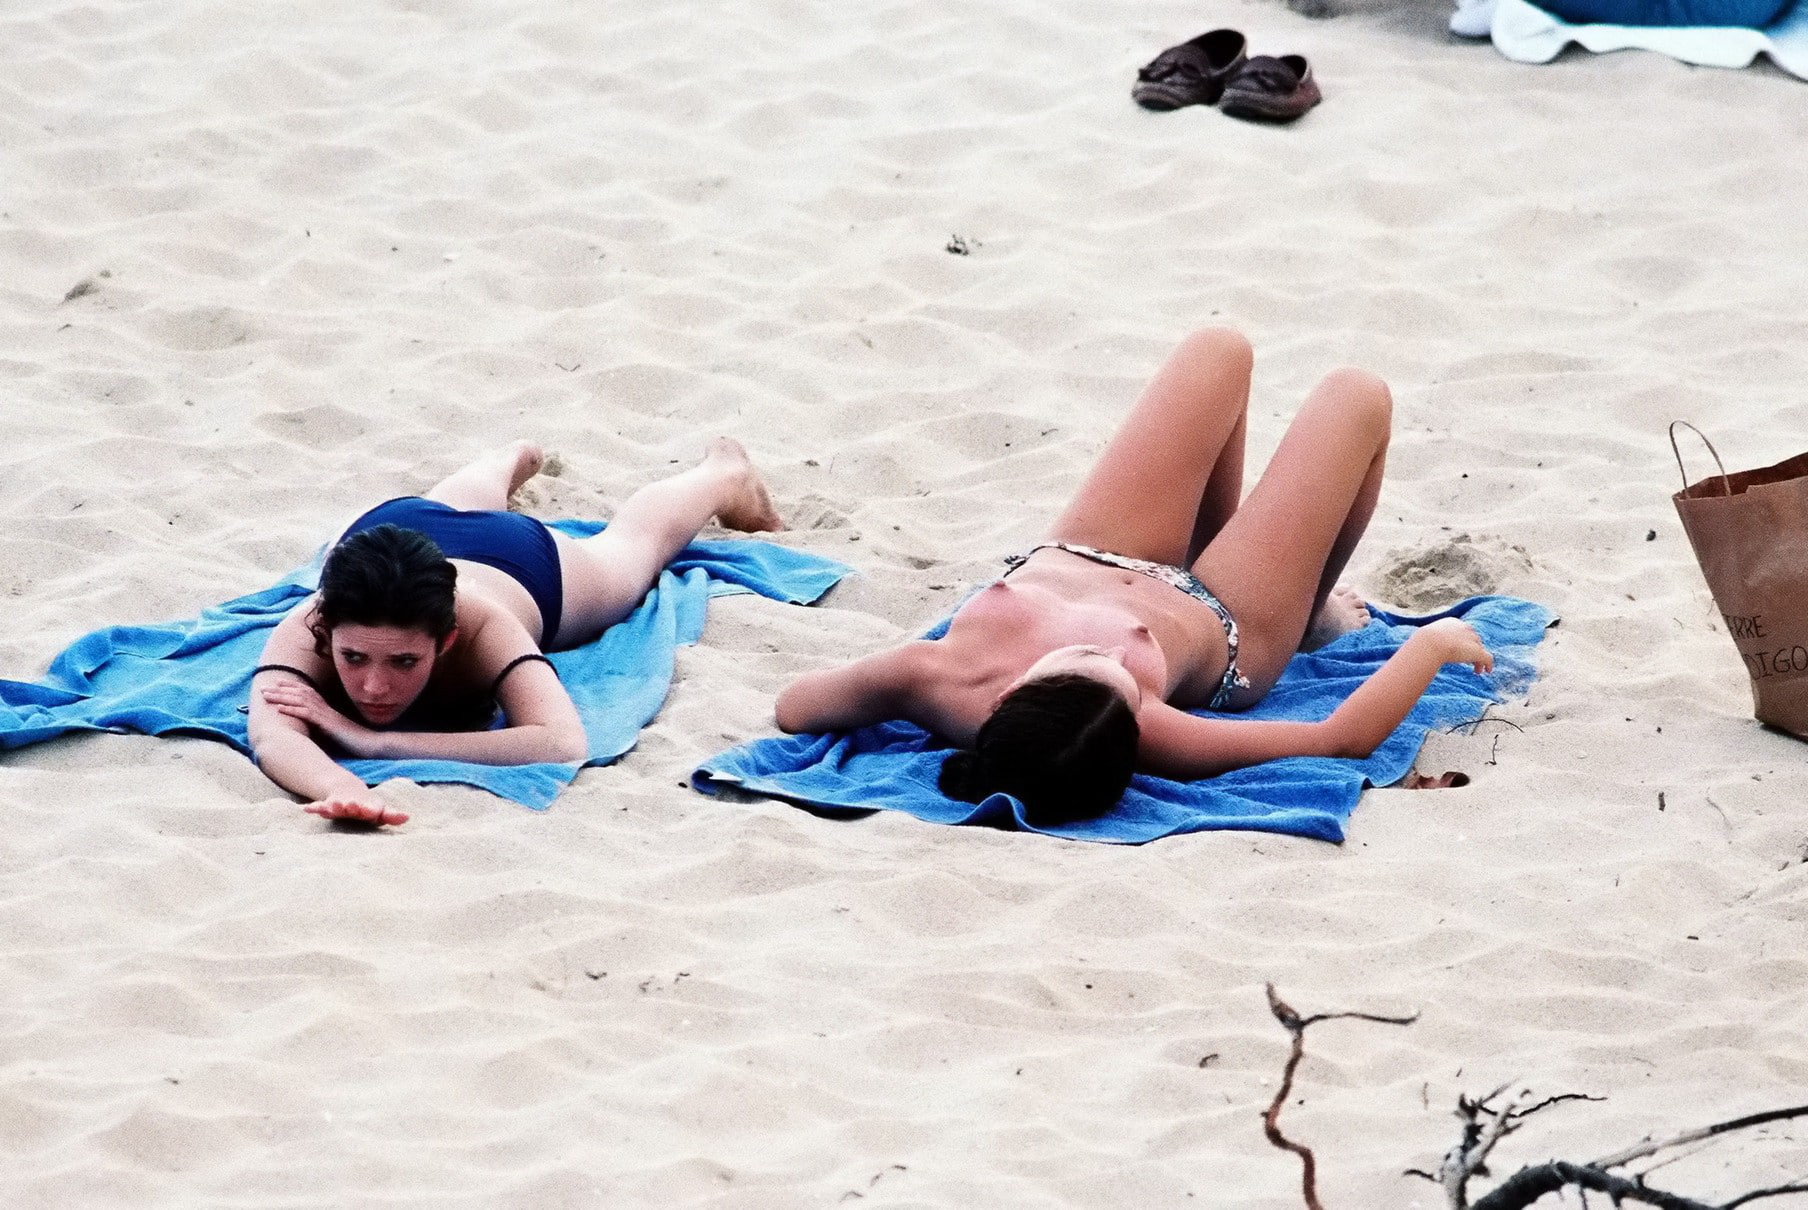 The stunning Natalie Portman getting some sun topless